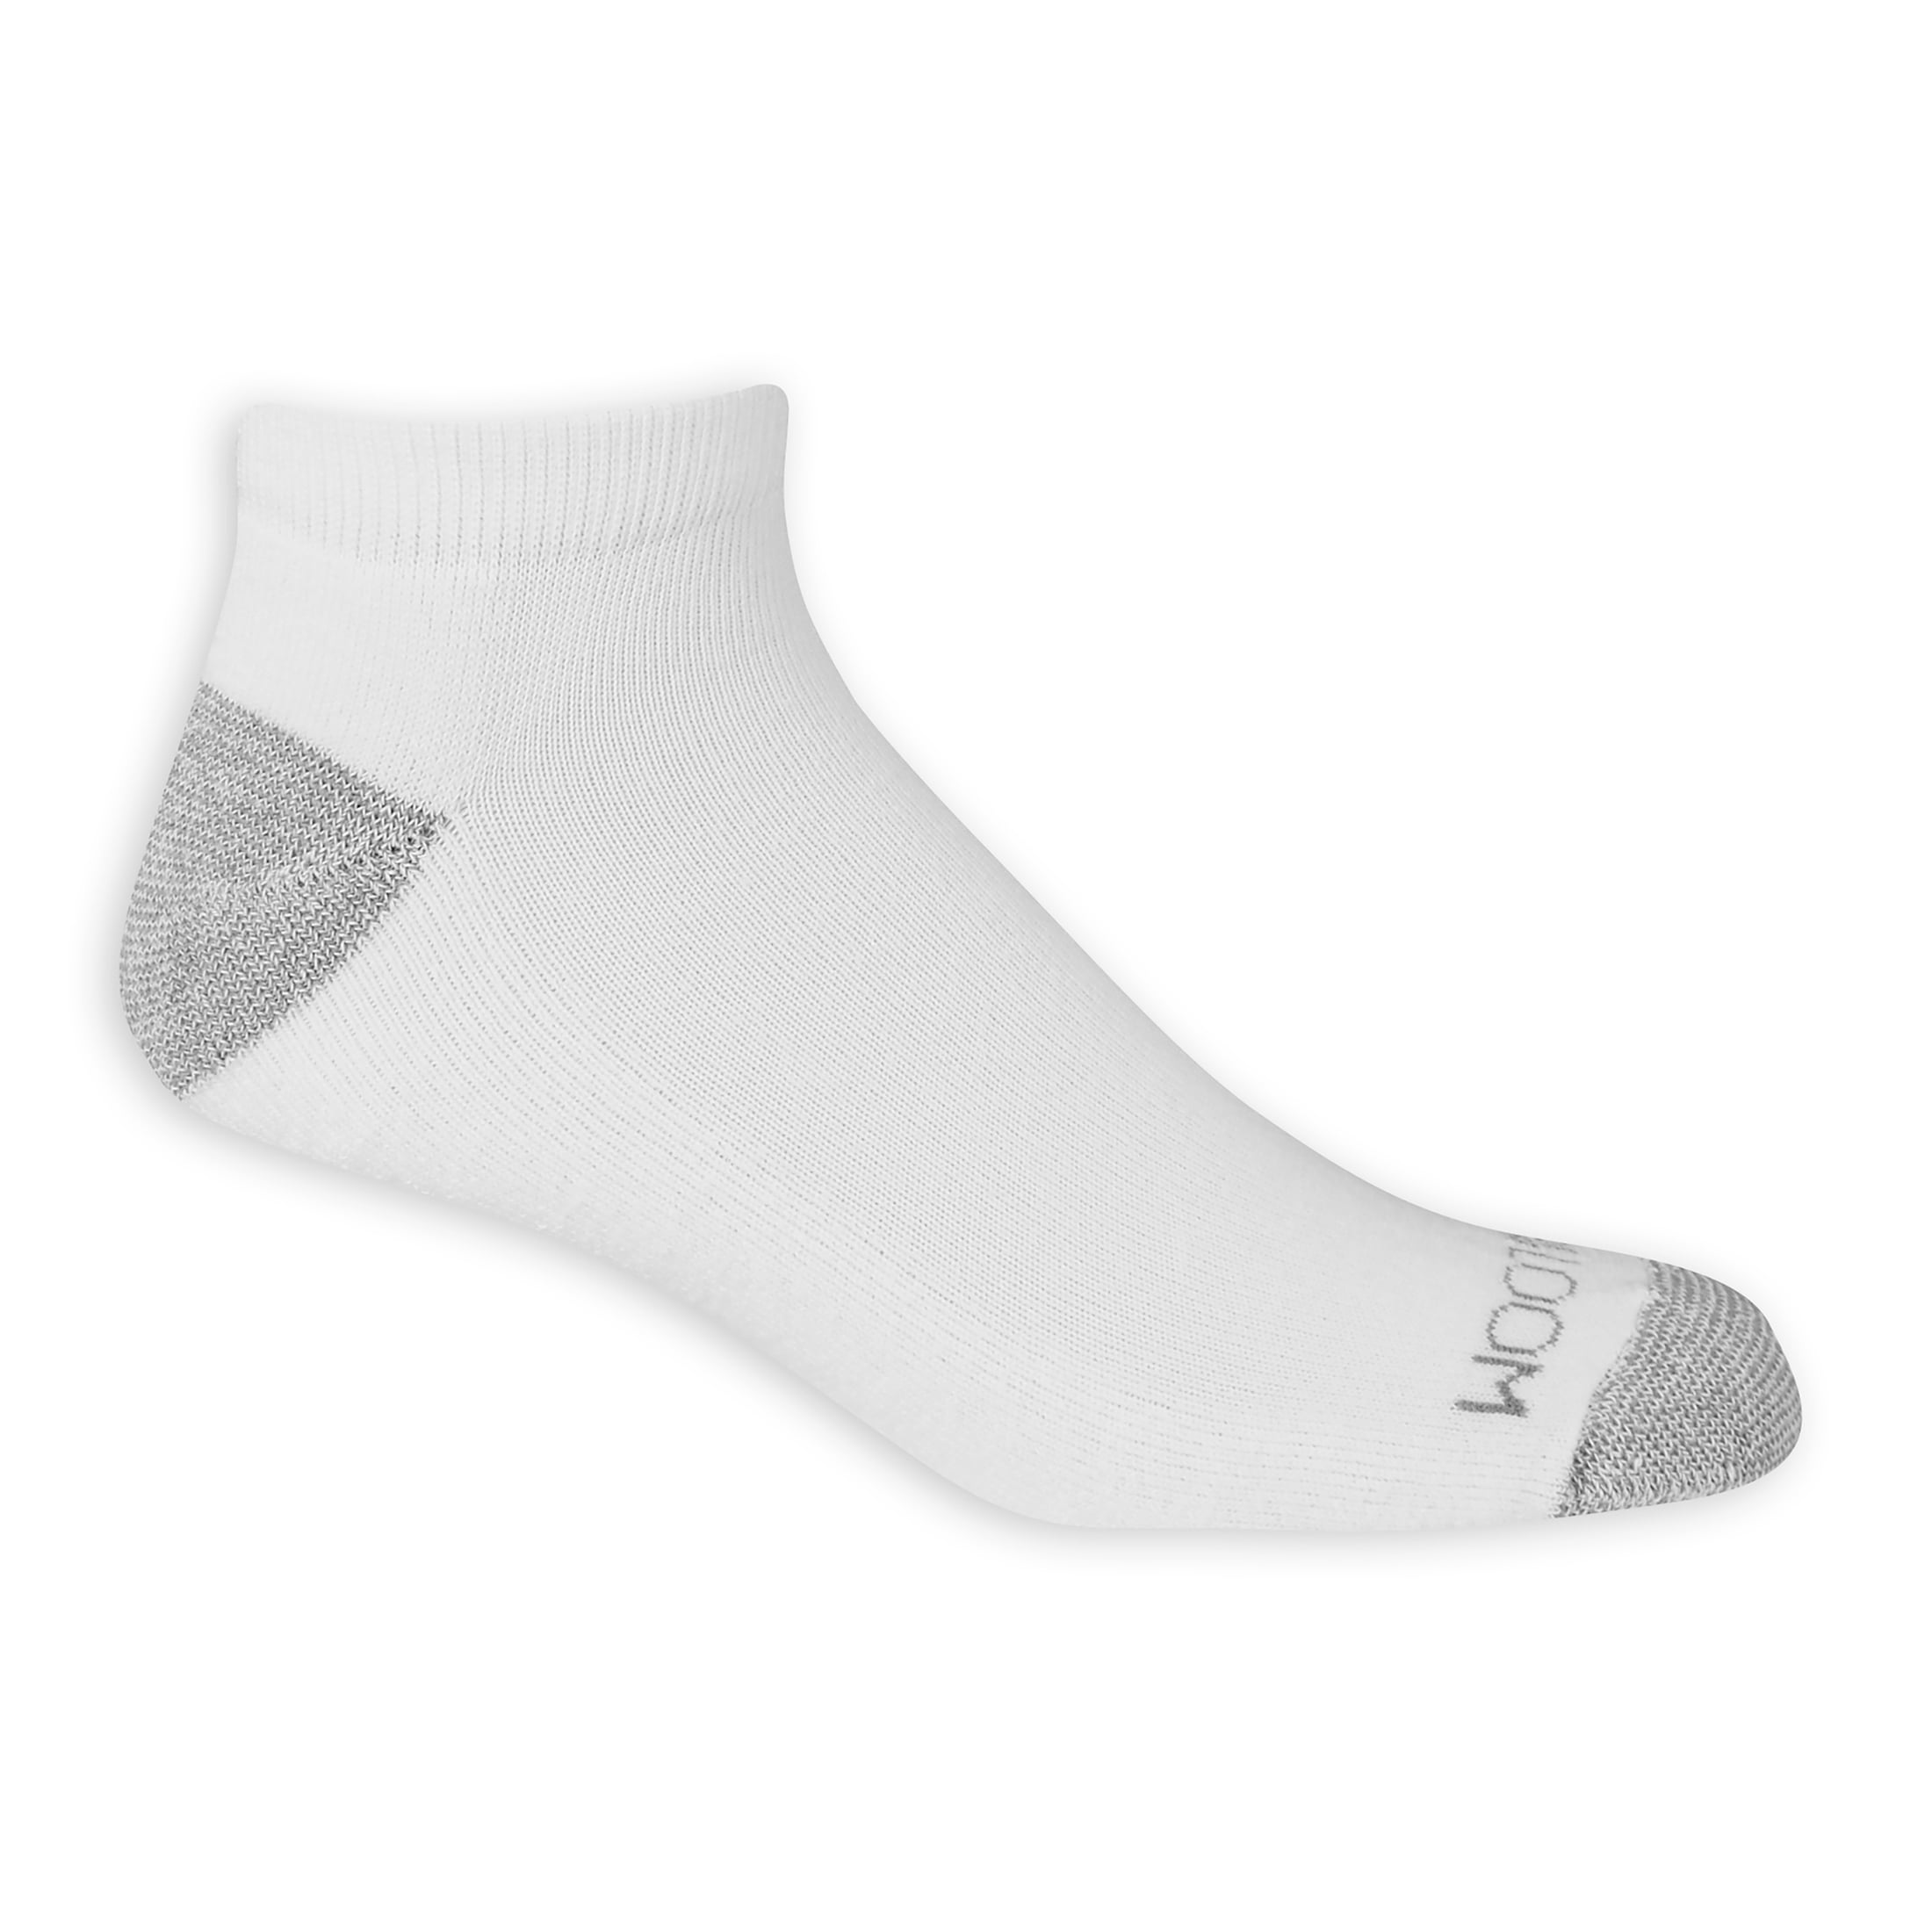 Fruit of the Loom Dual Defense Low-Cut Socks for Men, White, Sizes 6-12 ...